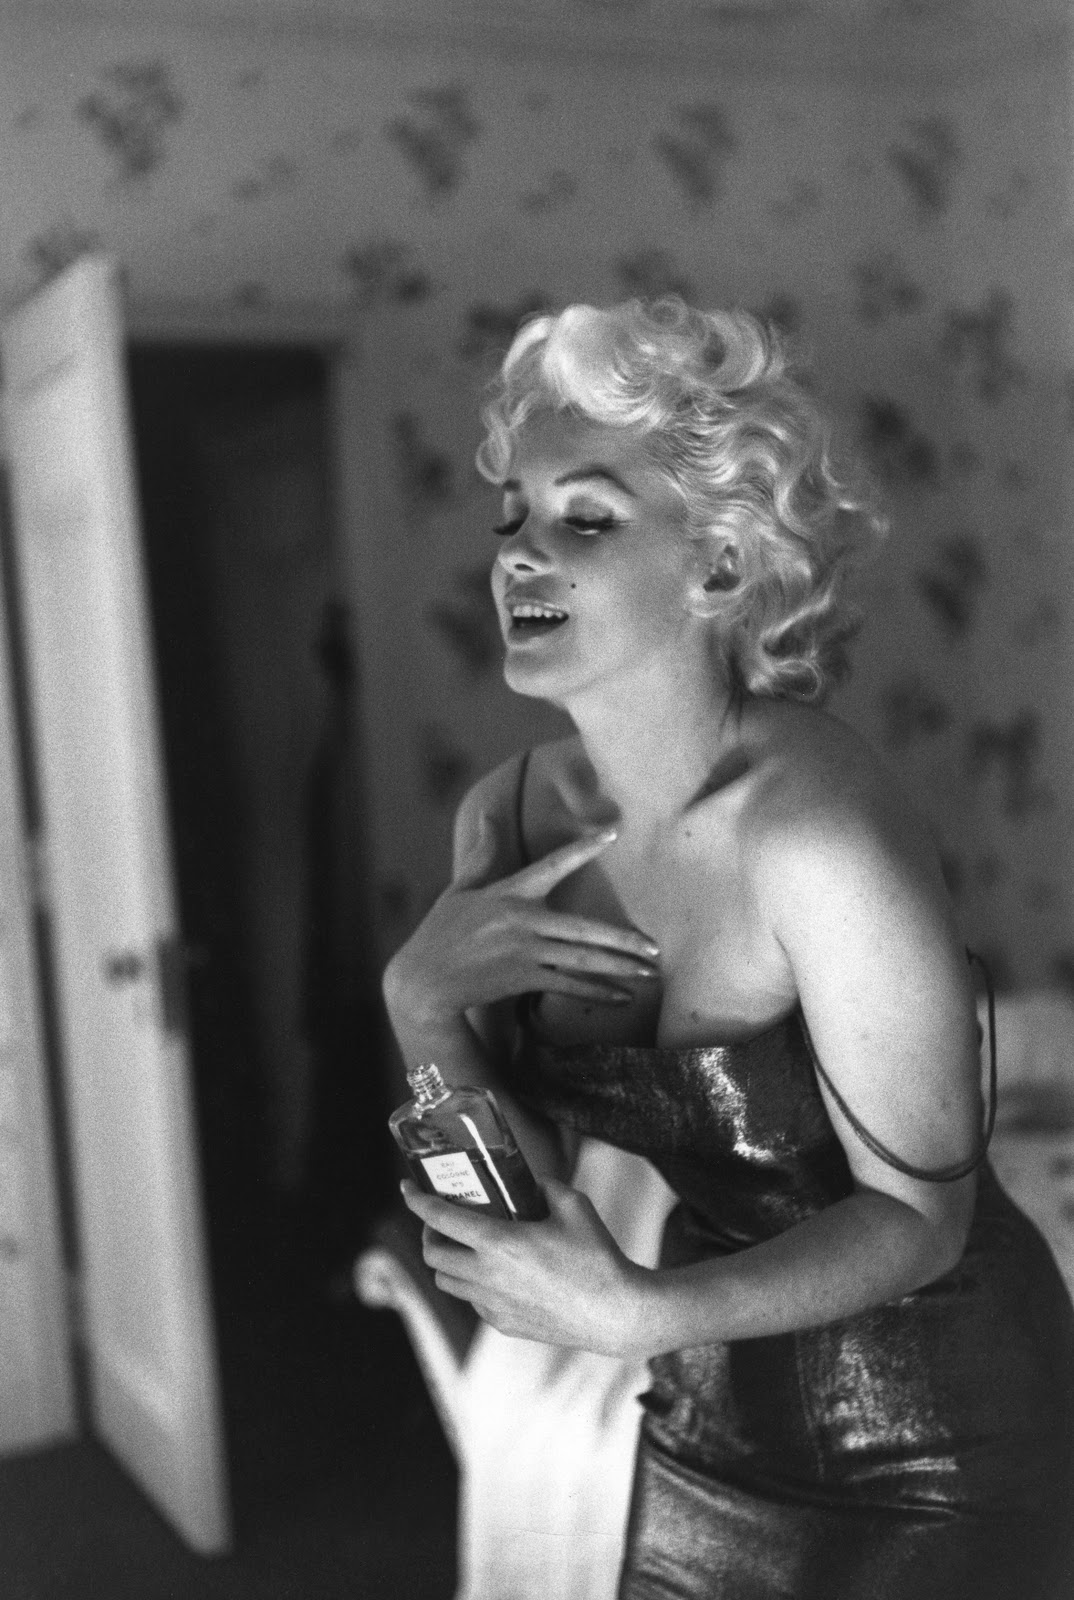 http://3.bp.blogspot.com/-6f-swzOE6pQ/TufPln_FkjI/AAAAAAAAA-I/i3b-aZeW4vE/s1600/1955+Marilyn+Monroe.jpg